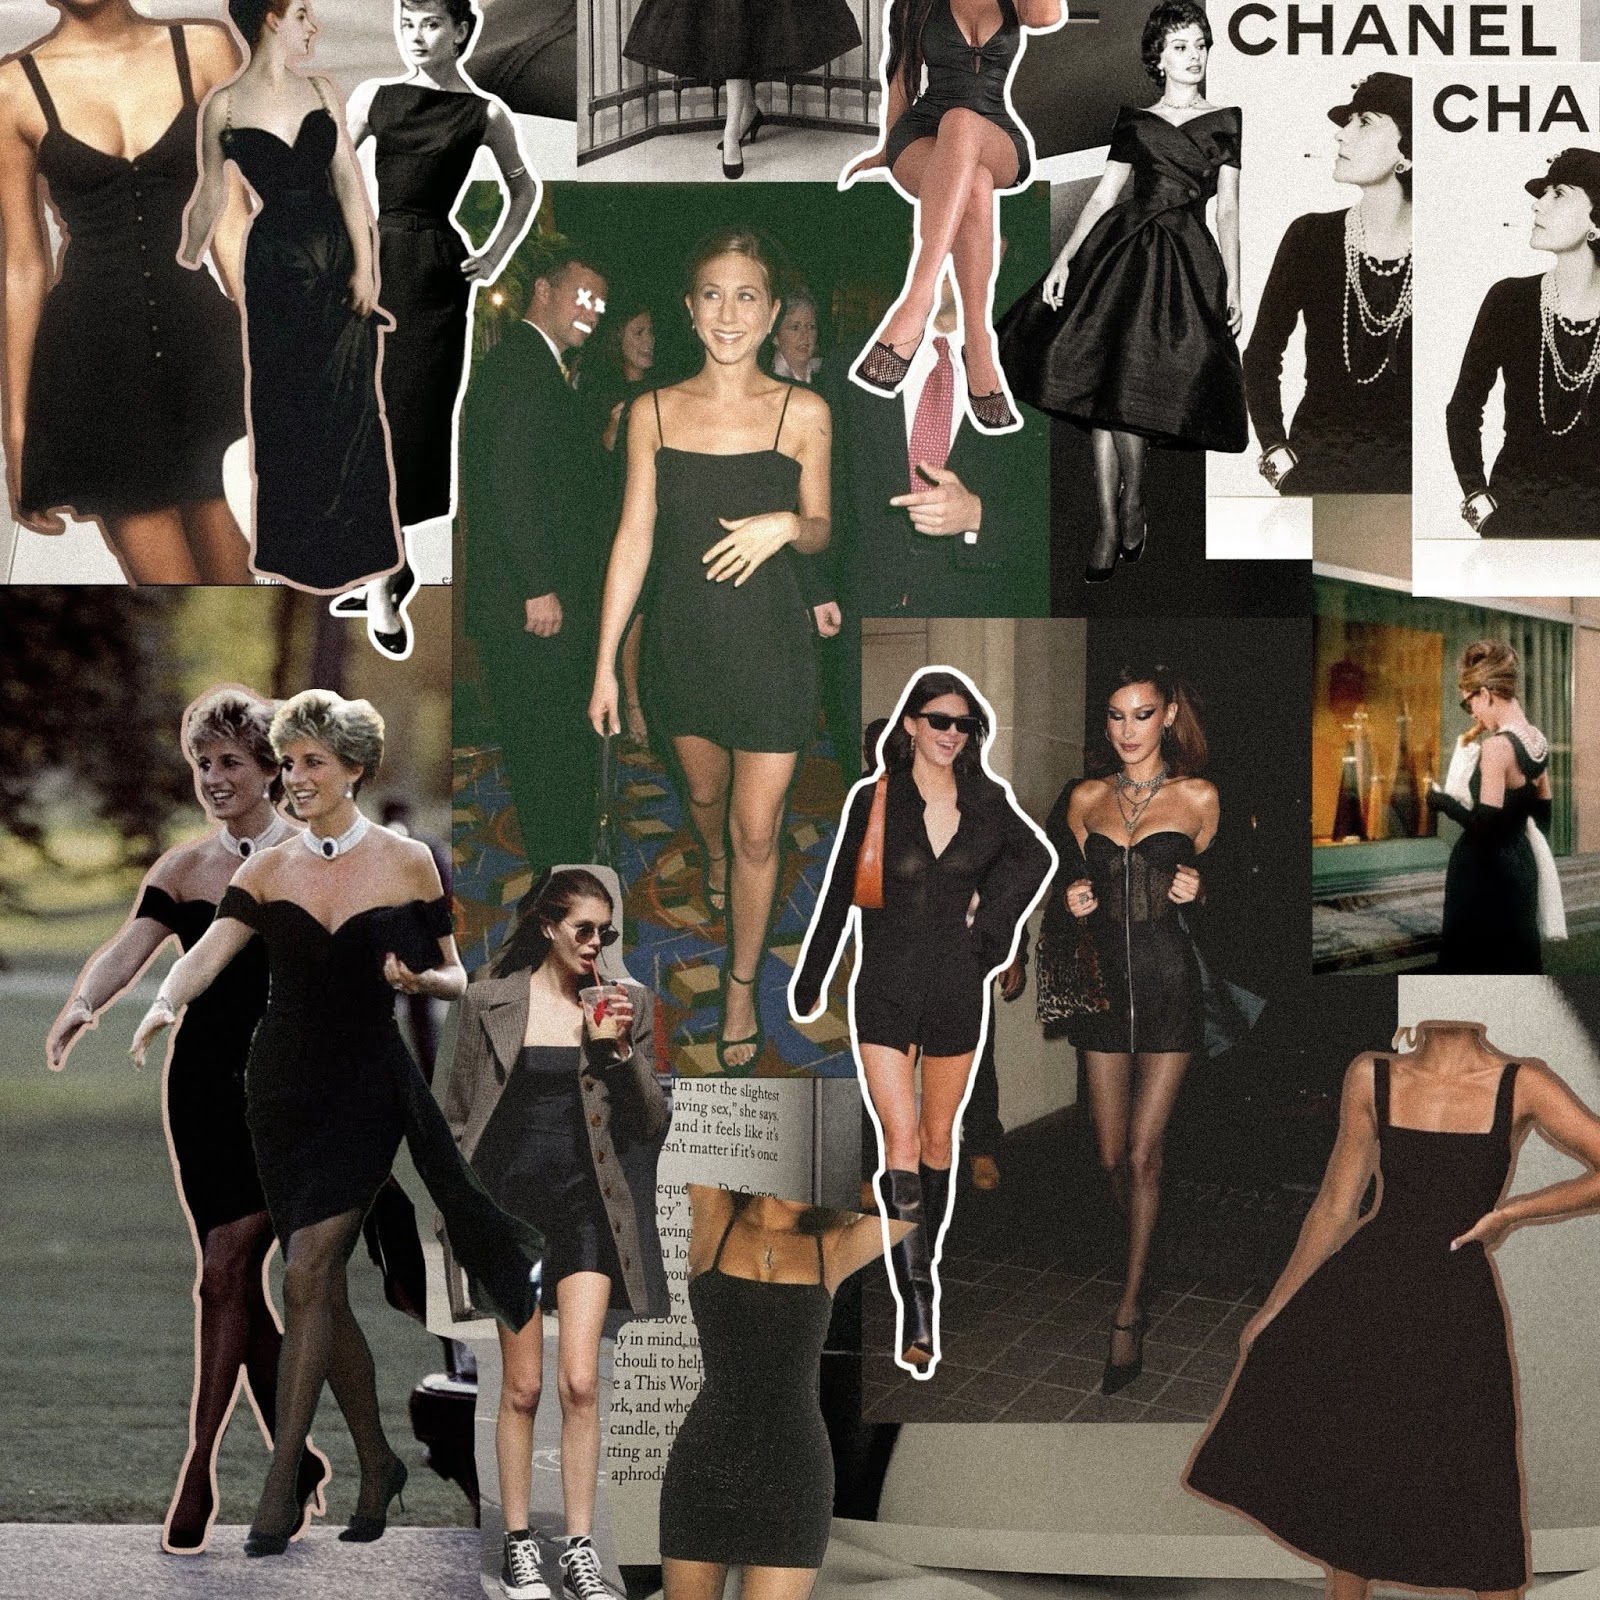 The Little Black Dress: A Timeless Tale of Elegance, Rebellion